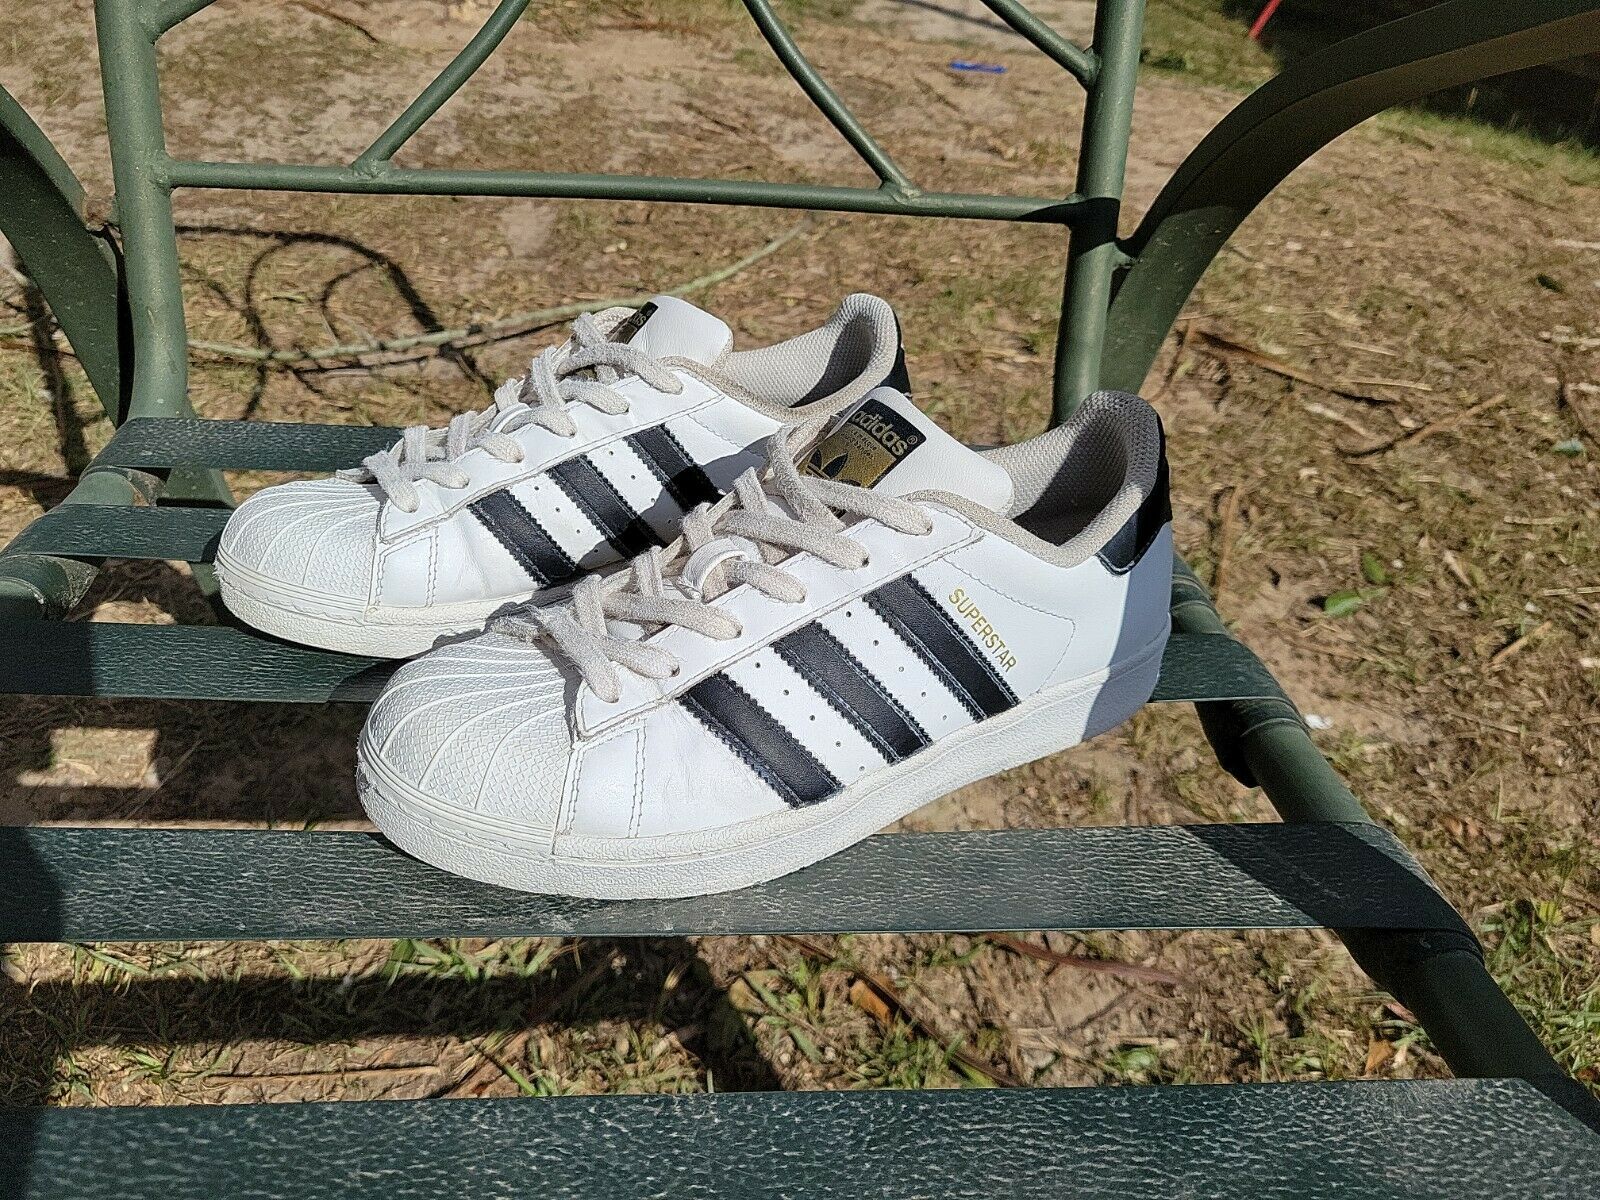 Adidas Superstar J White/Black/White Shoes Juniors Size 6.5 #C77154